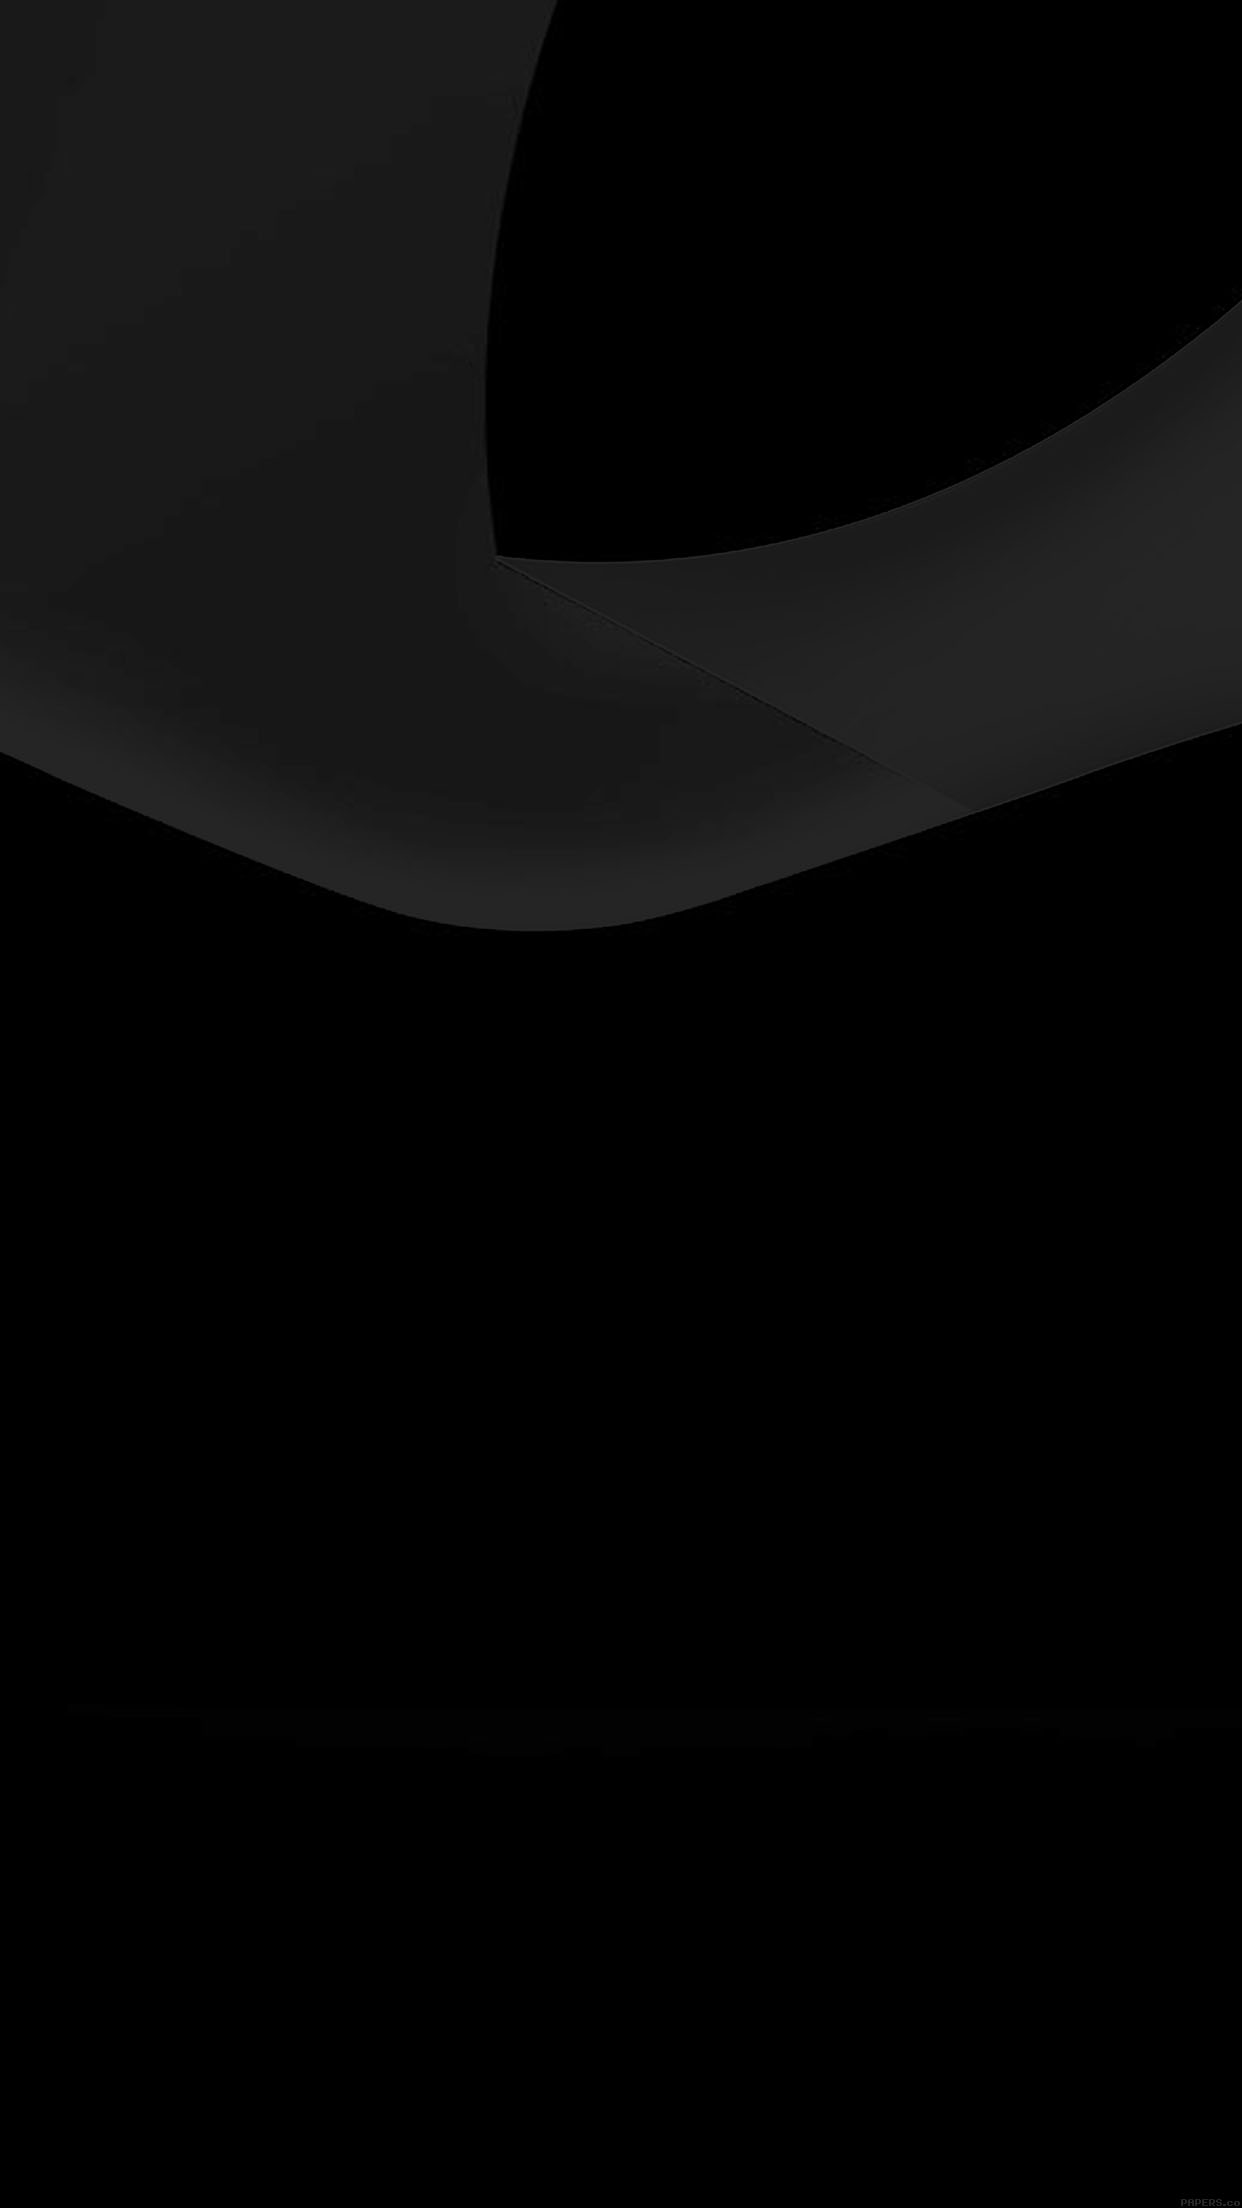 Wallpaper Apple Dark Live 2014 Minimal Android wallpaper